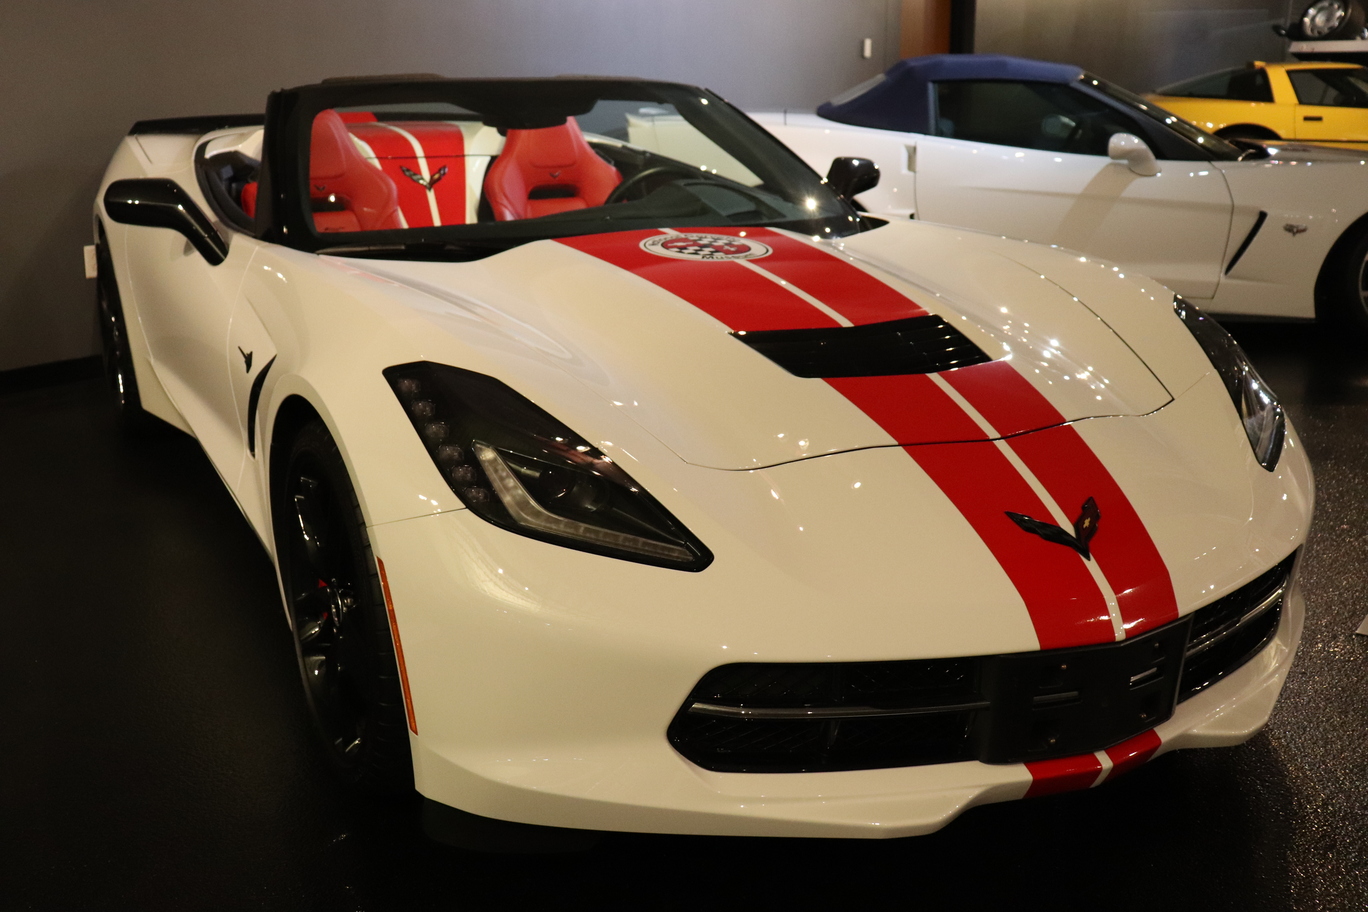 2014 Corvette raffled off at the 20th Anniversary of the National Corvette Museum celebration